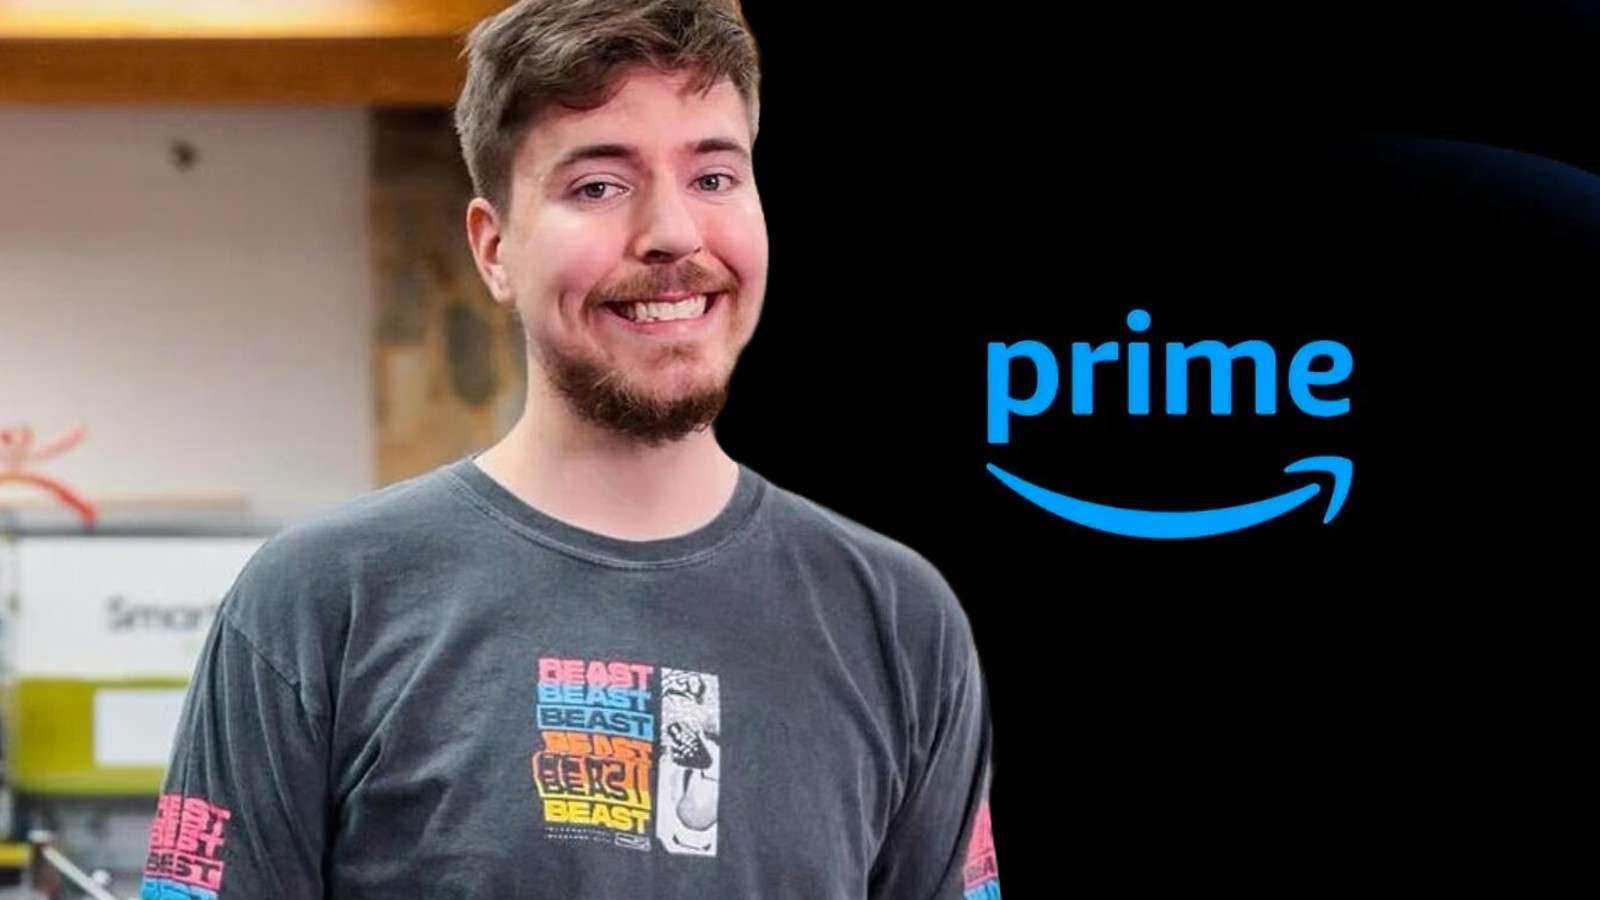 MrBeast and an Amazon Prime logo